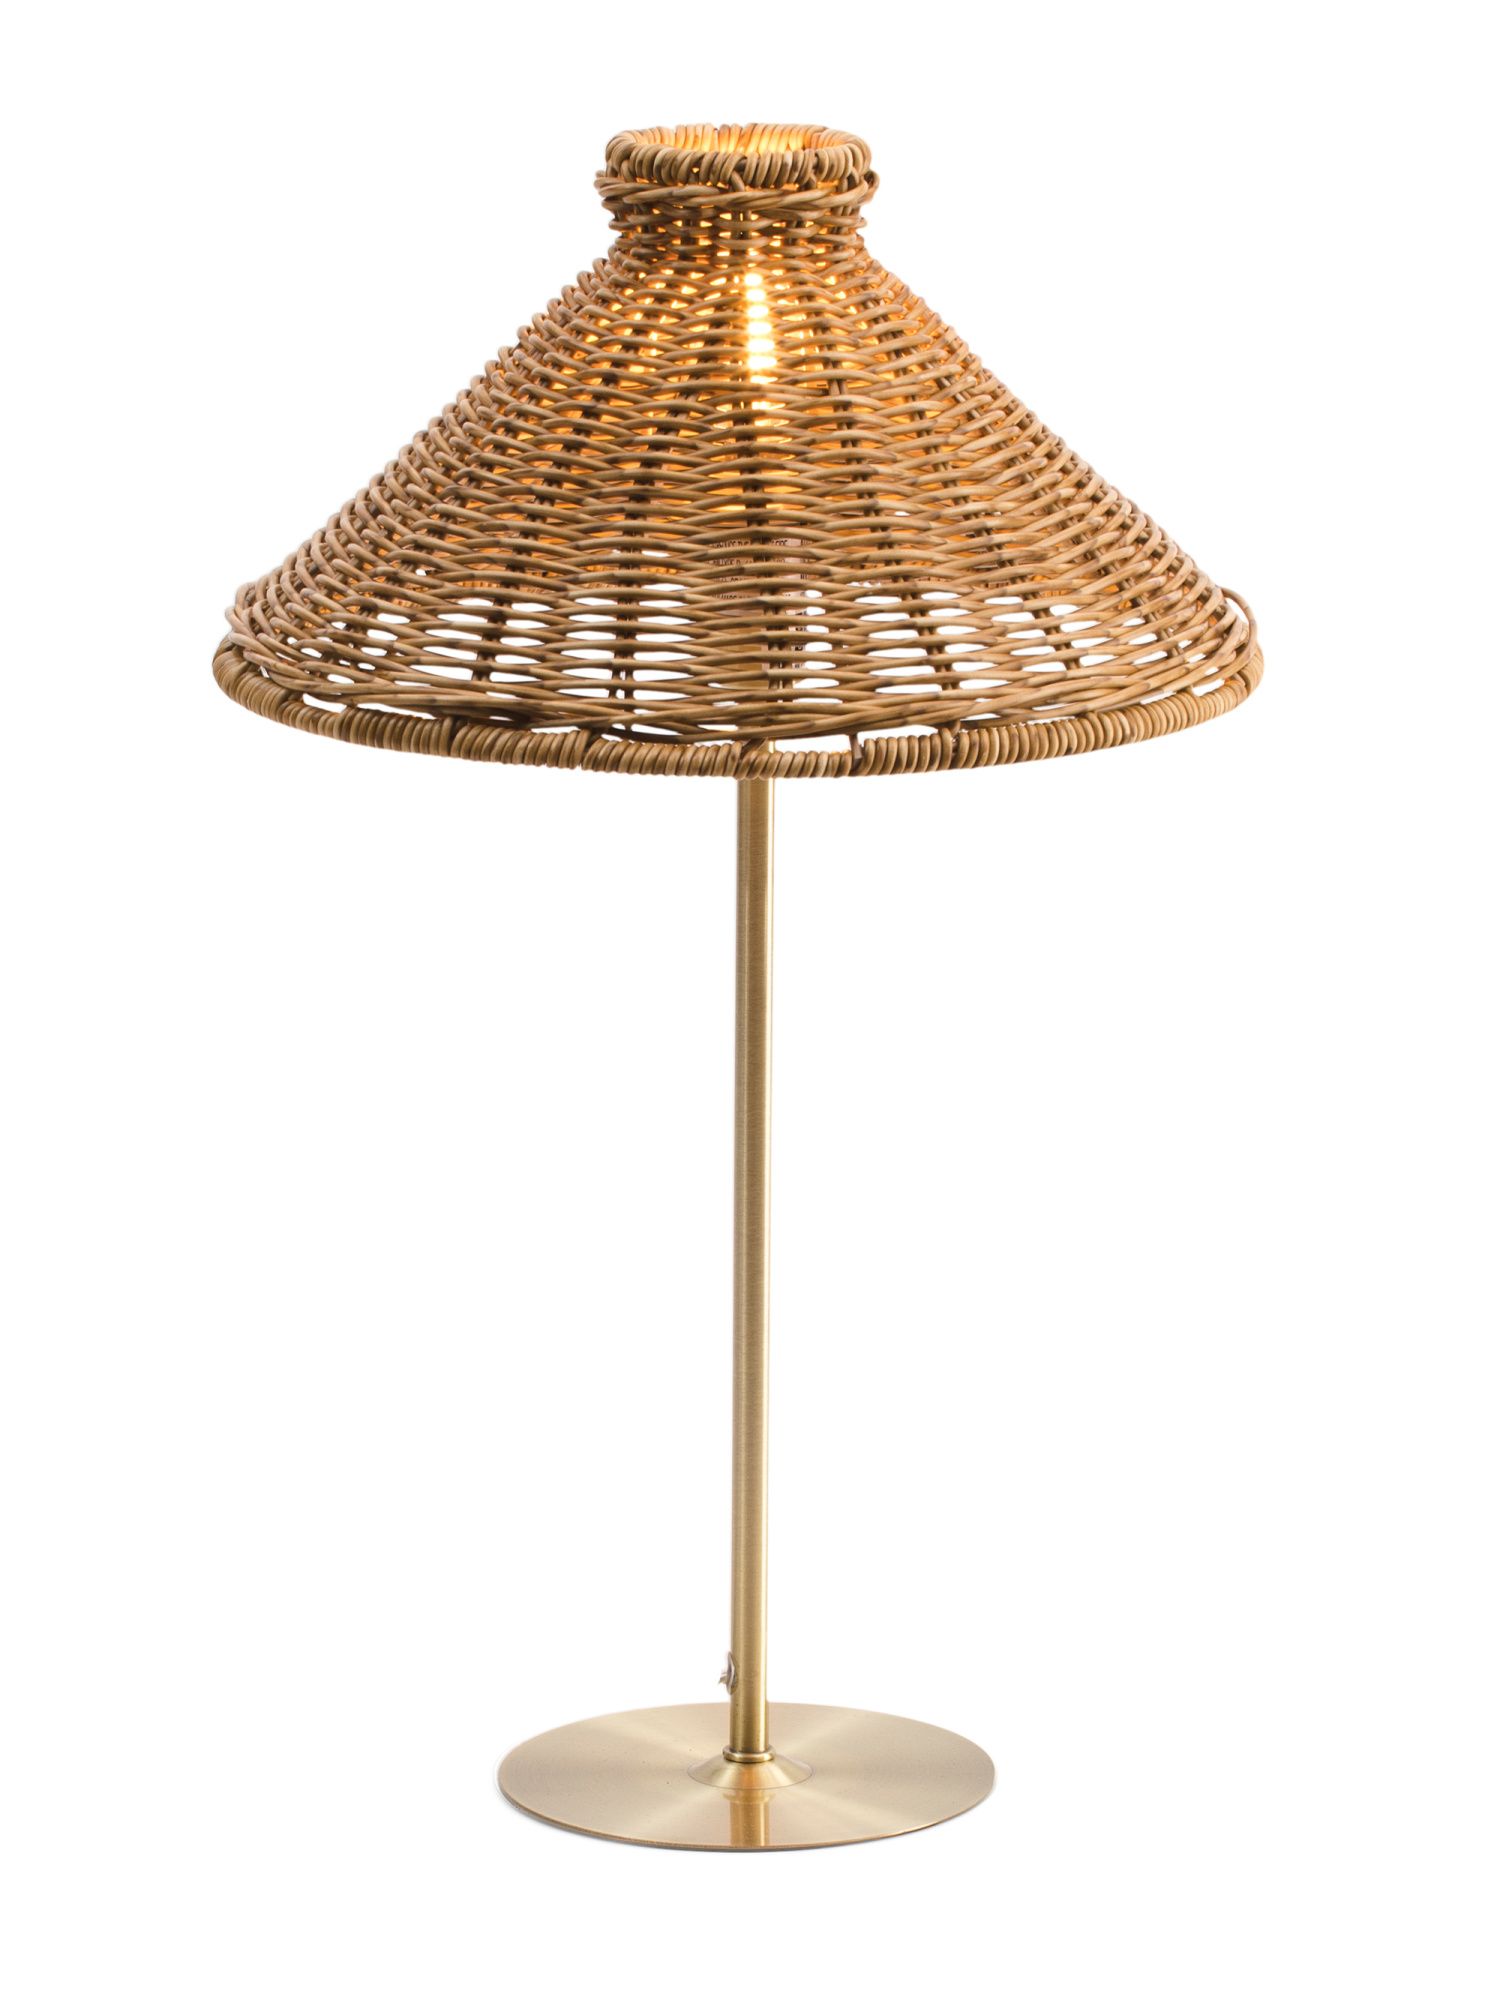 Wicker Cone Shamped Table Lamp | Home | T.J.Maxx | TJ Maxx